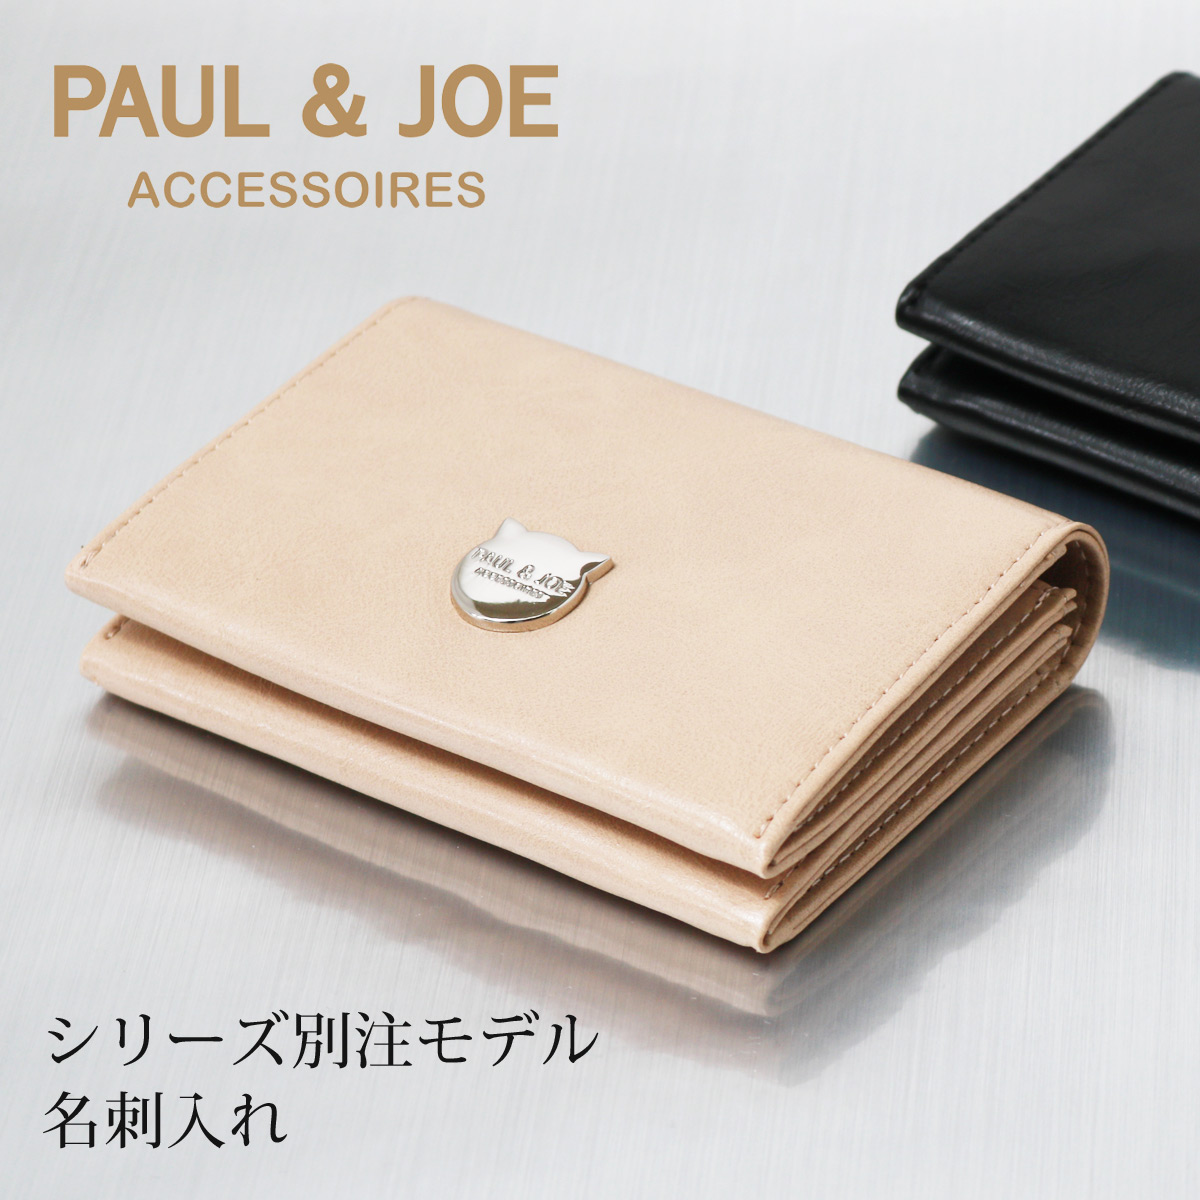  paul (pole) & Joe accessory sowa card-case lady's PJA-W379 paul (pole) and Joe PAUL&amp;JOE ACCESSOIRES our company limitation collaboration special order model card-case cat ..